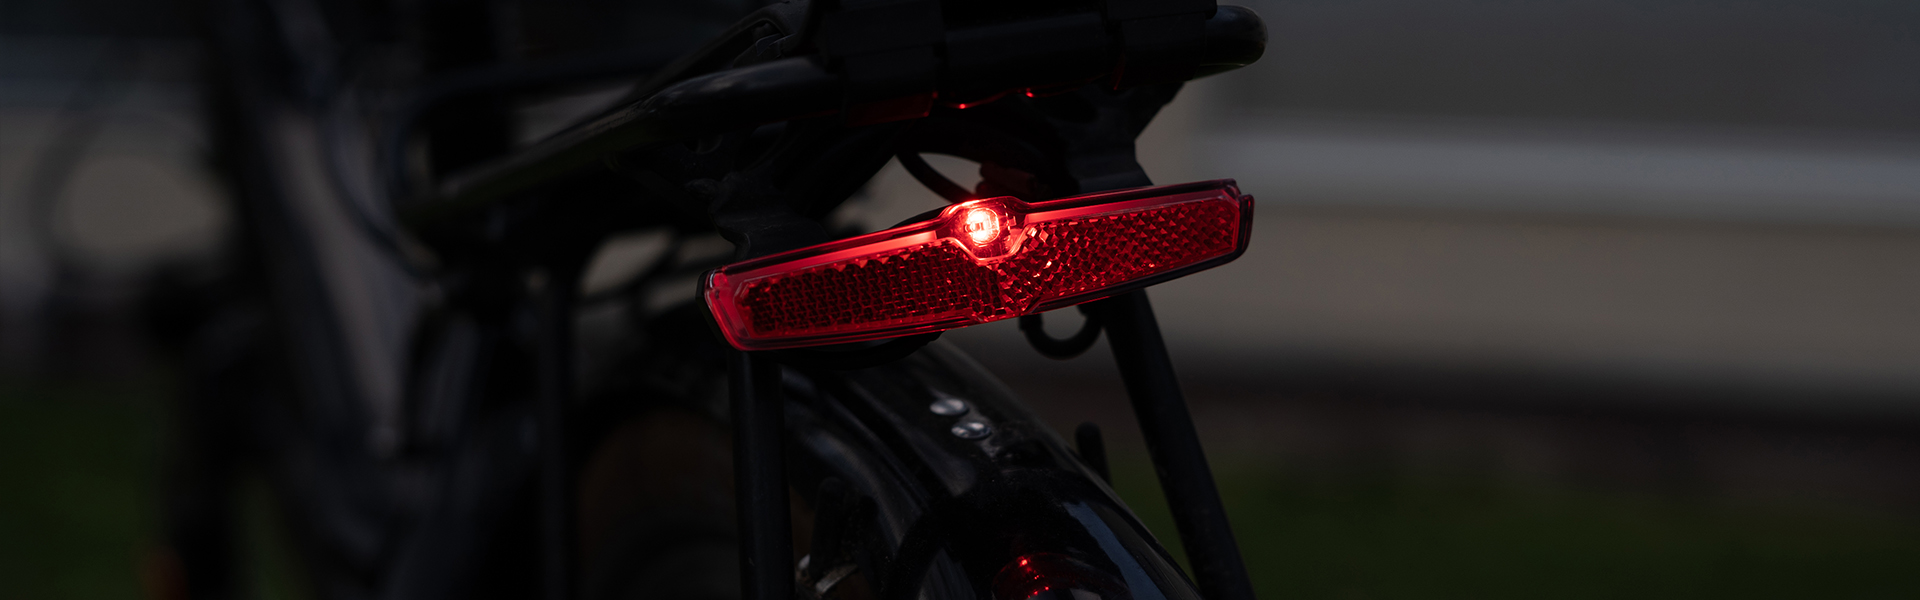 Sate-lite  bike light StVZO eletric bike rear light CREE LED waterproof